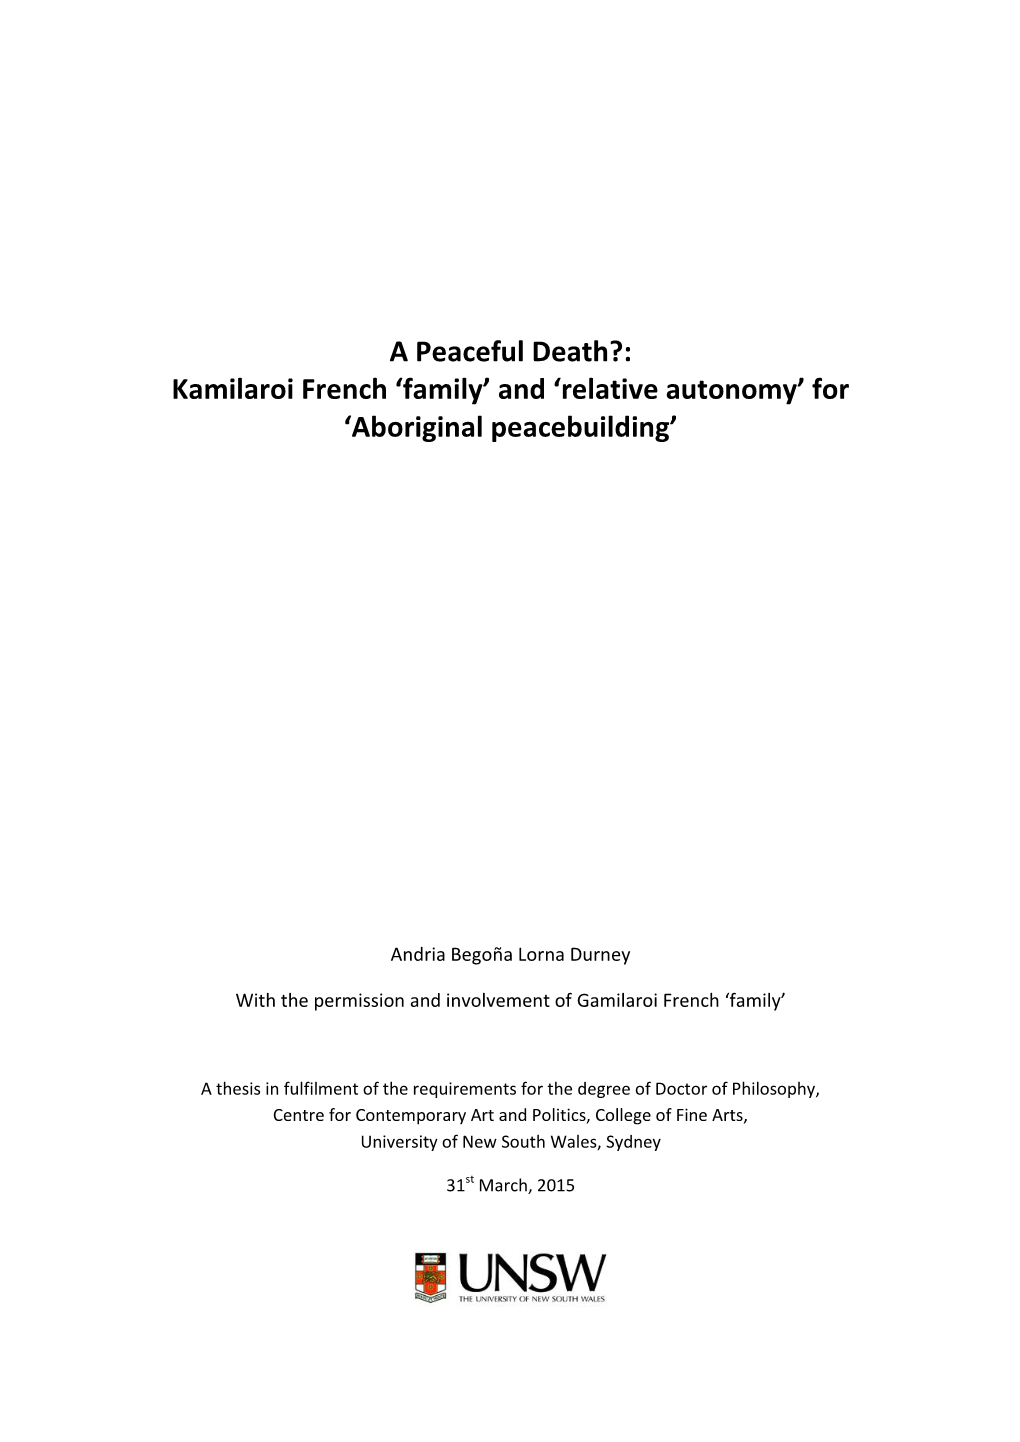 Kamilaroi French ‘Family’ and ‘Relative Autonomy’ for ‘Aboriginal Peacebuilding’